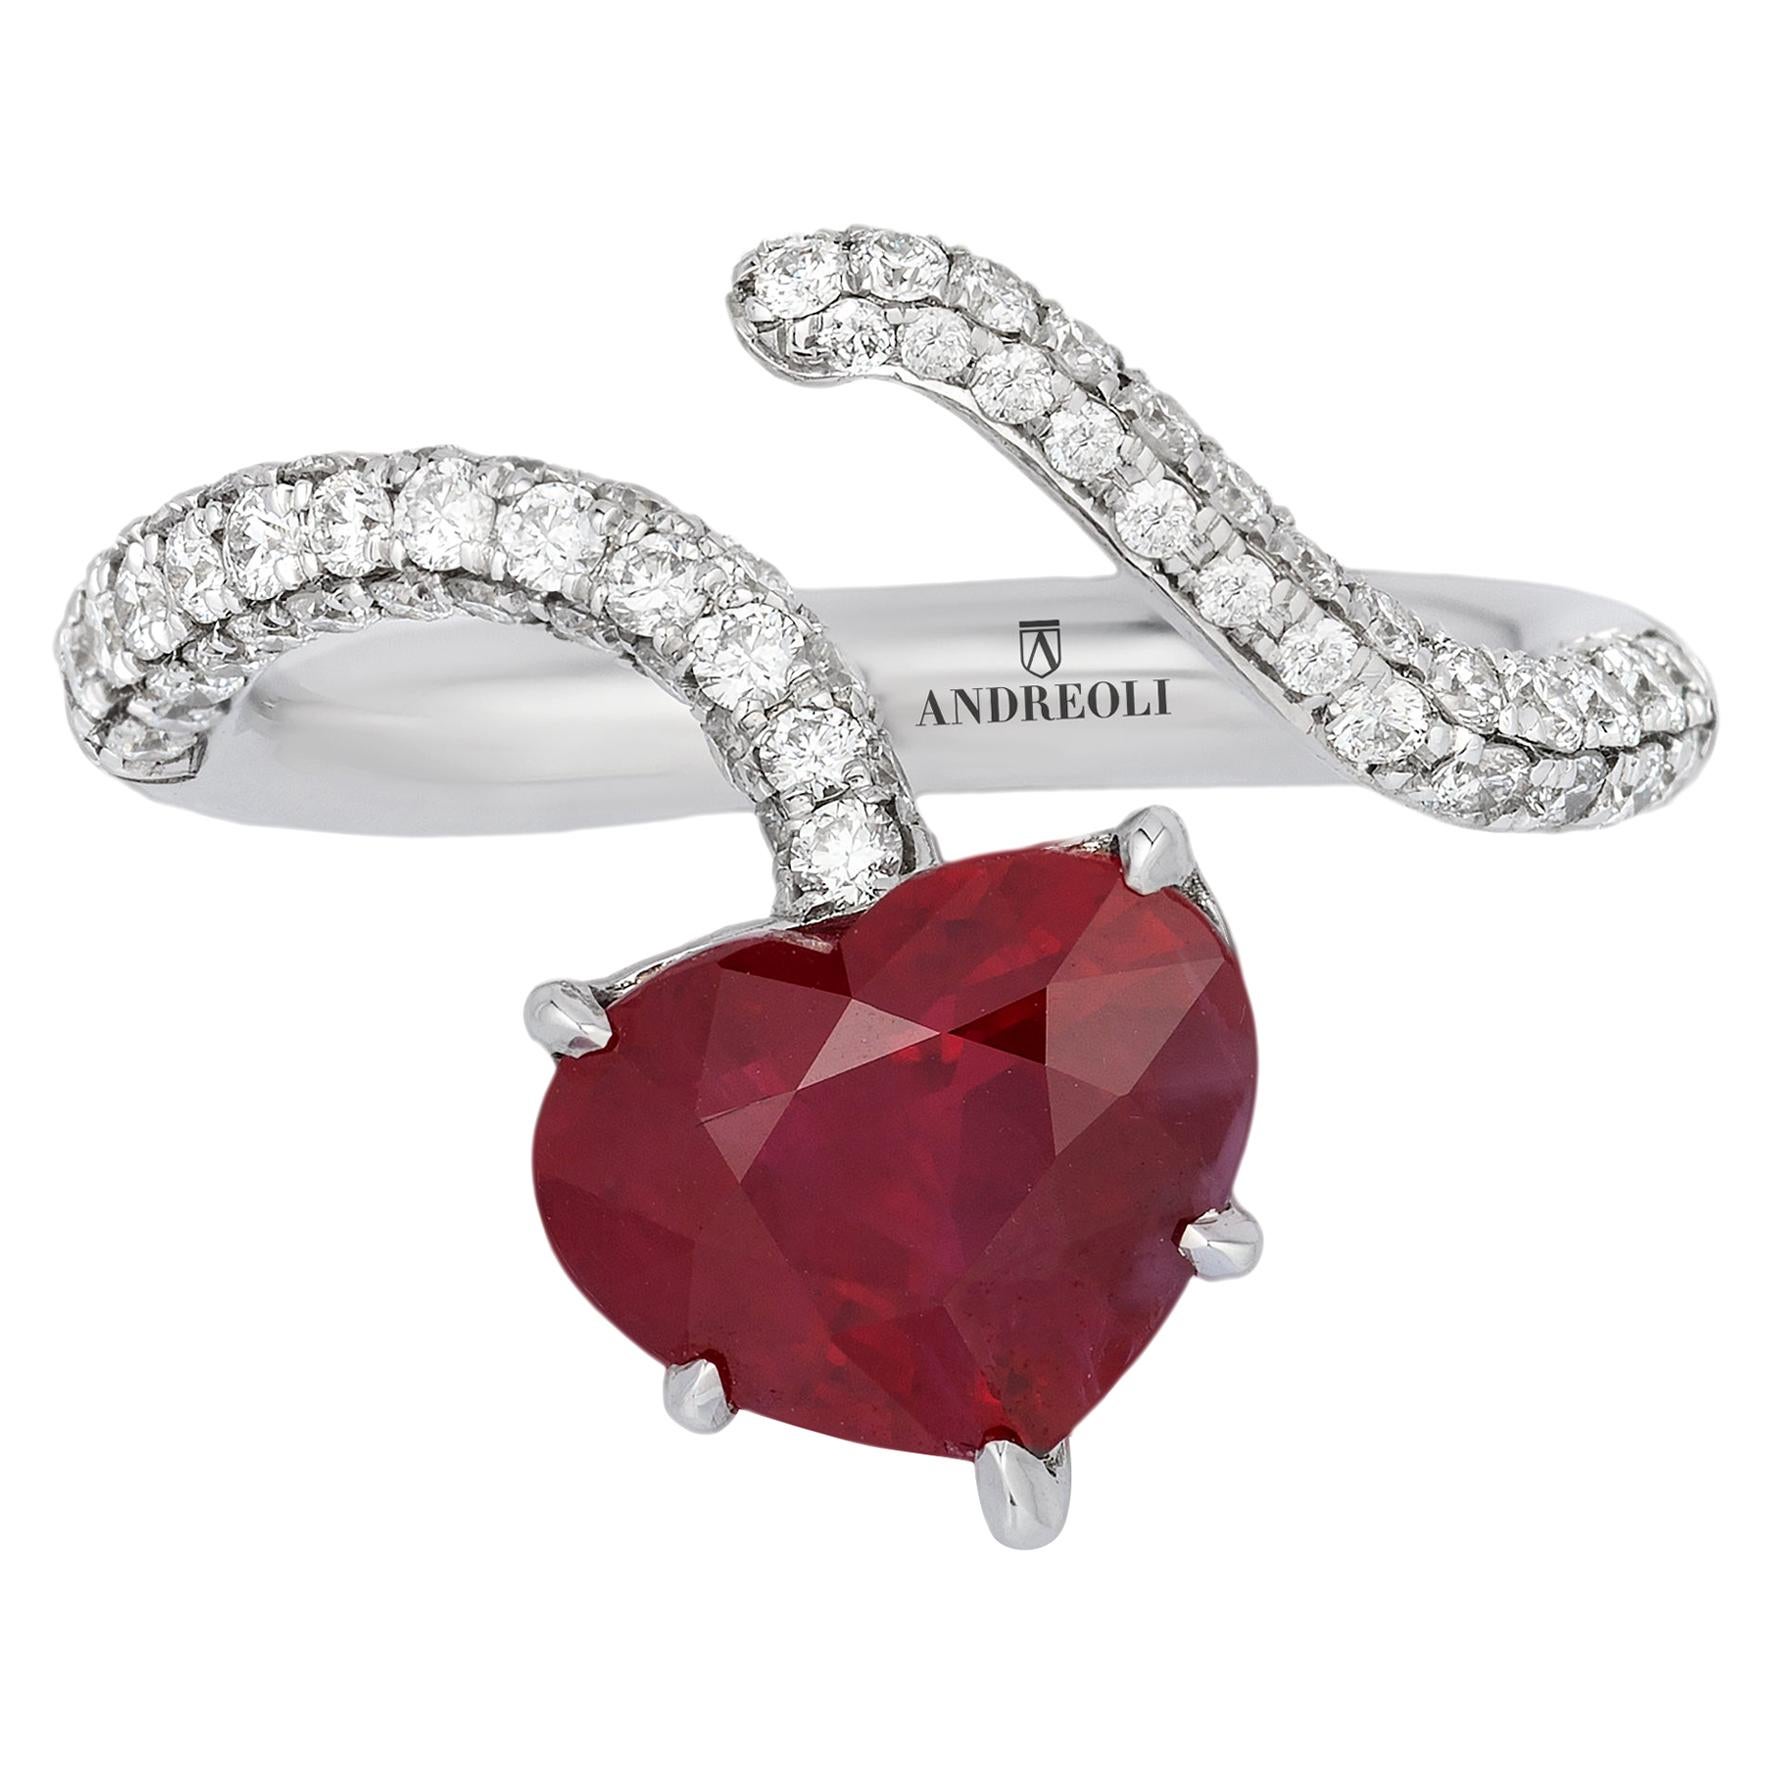 Andreoli Certified 4.02 Carat Burma Ruby Heart Shape Ring Diamond 18 Karat Gold